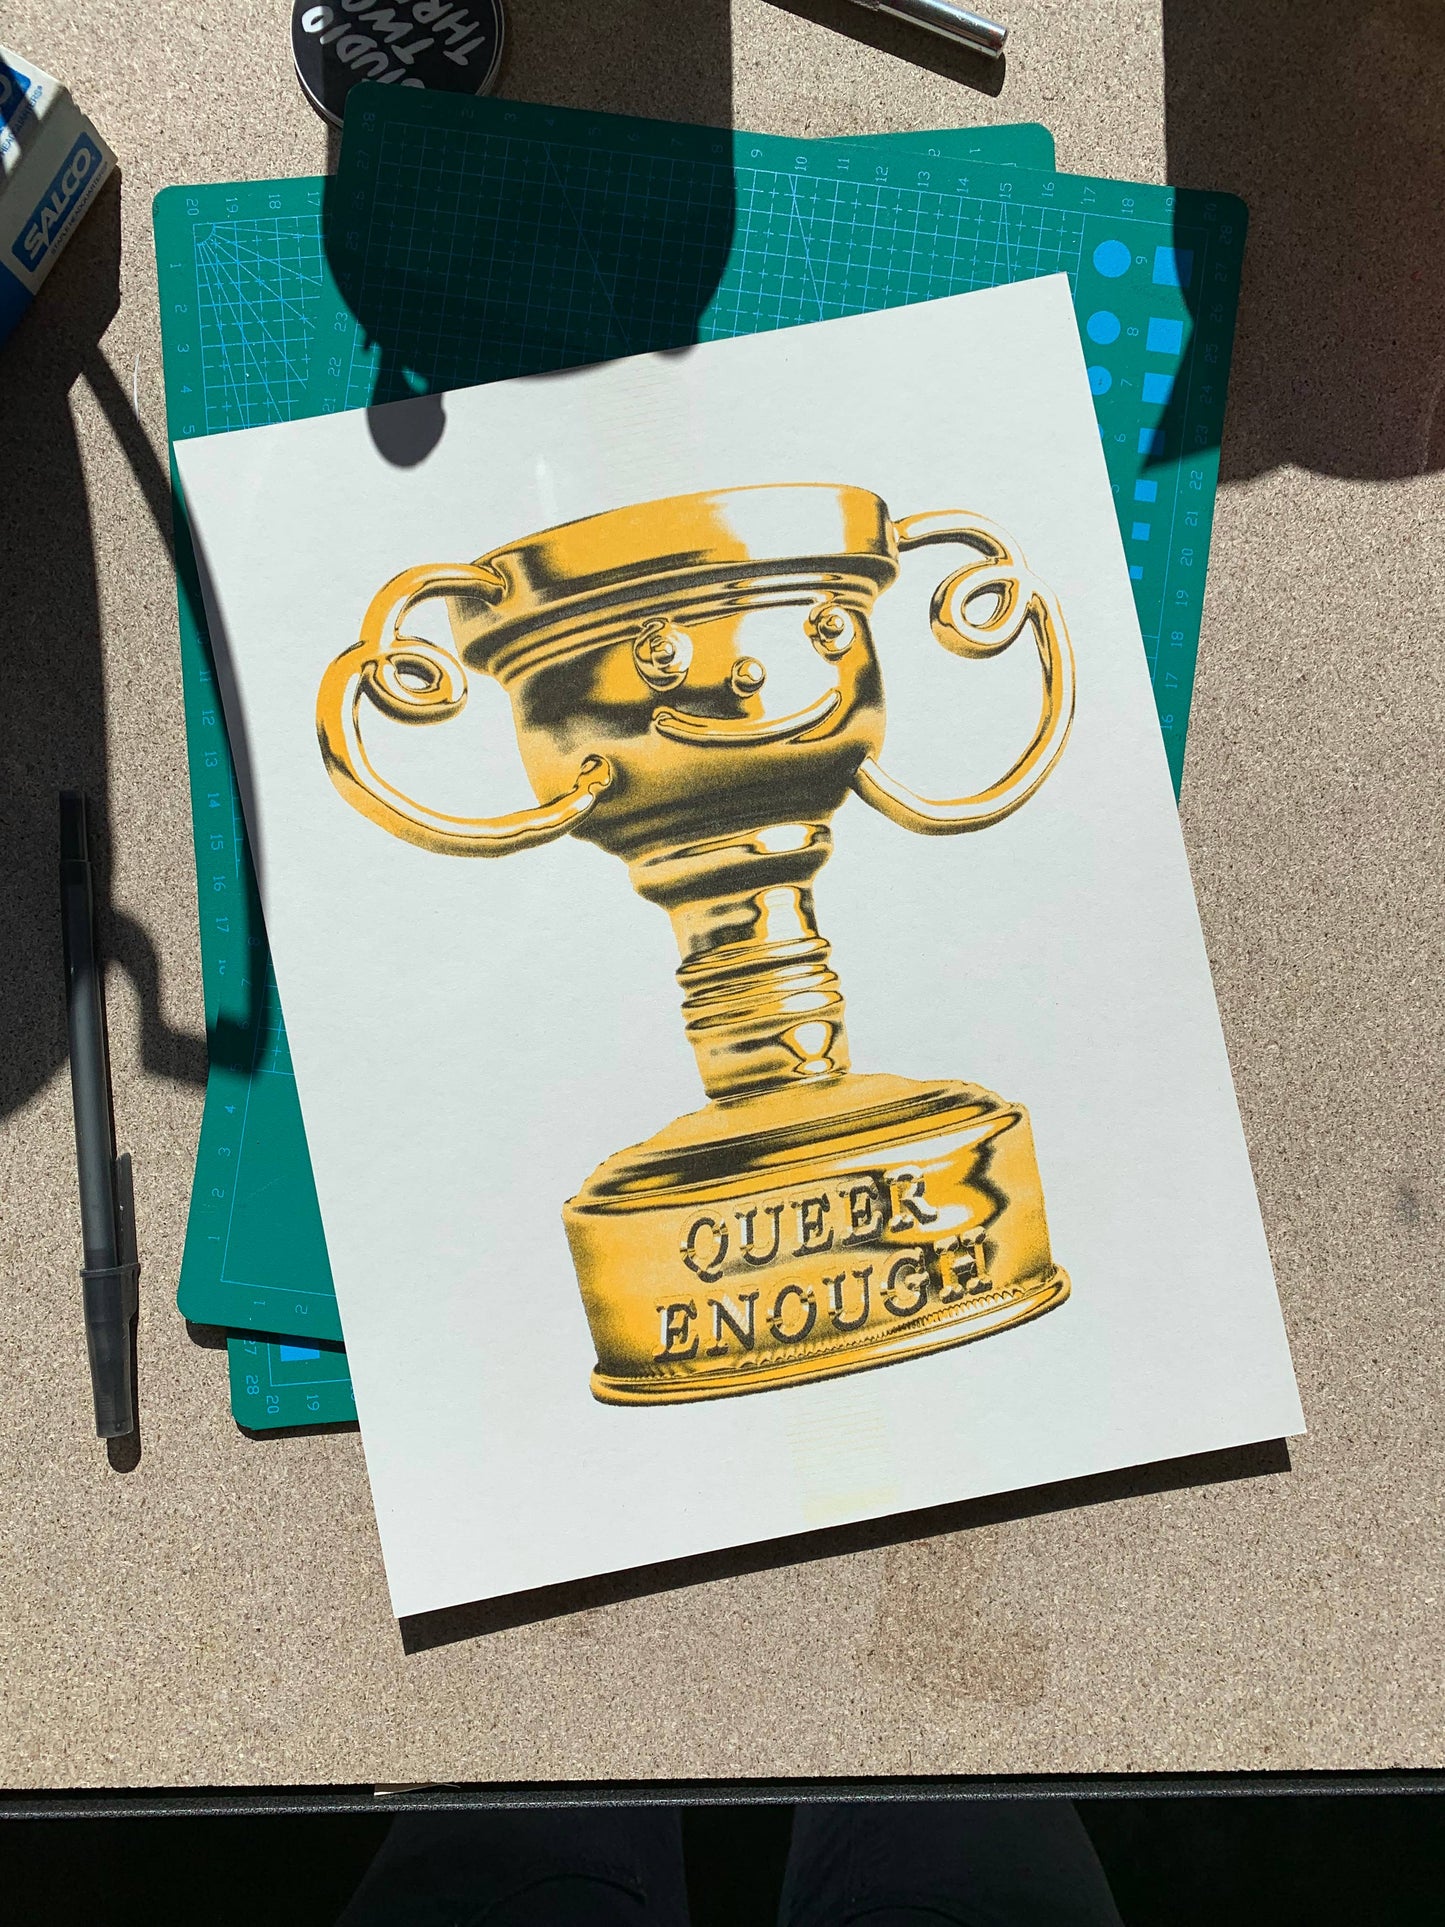 Queer Enough Trophy 8.5x11" riso print